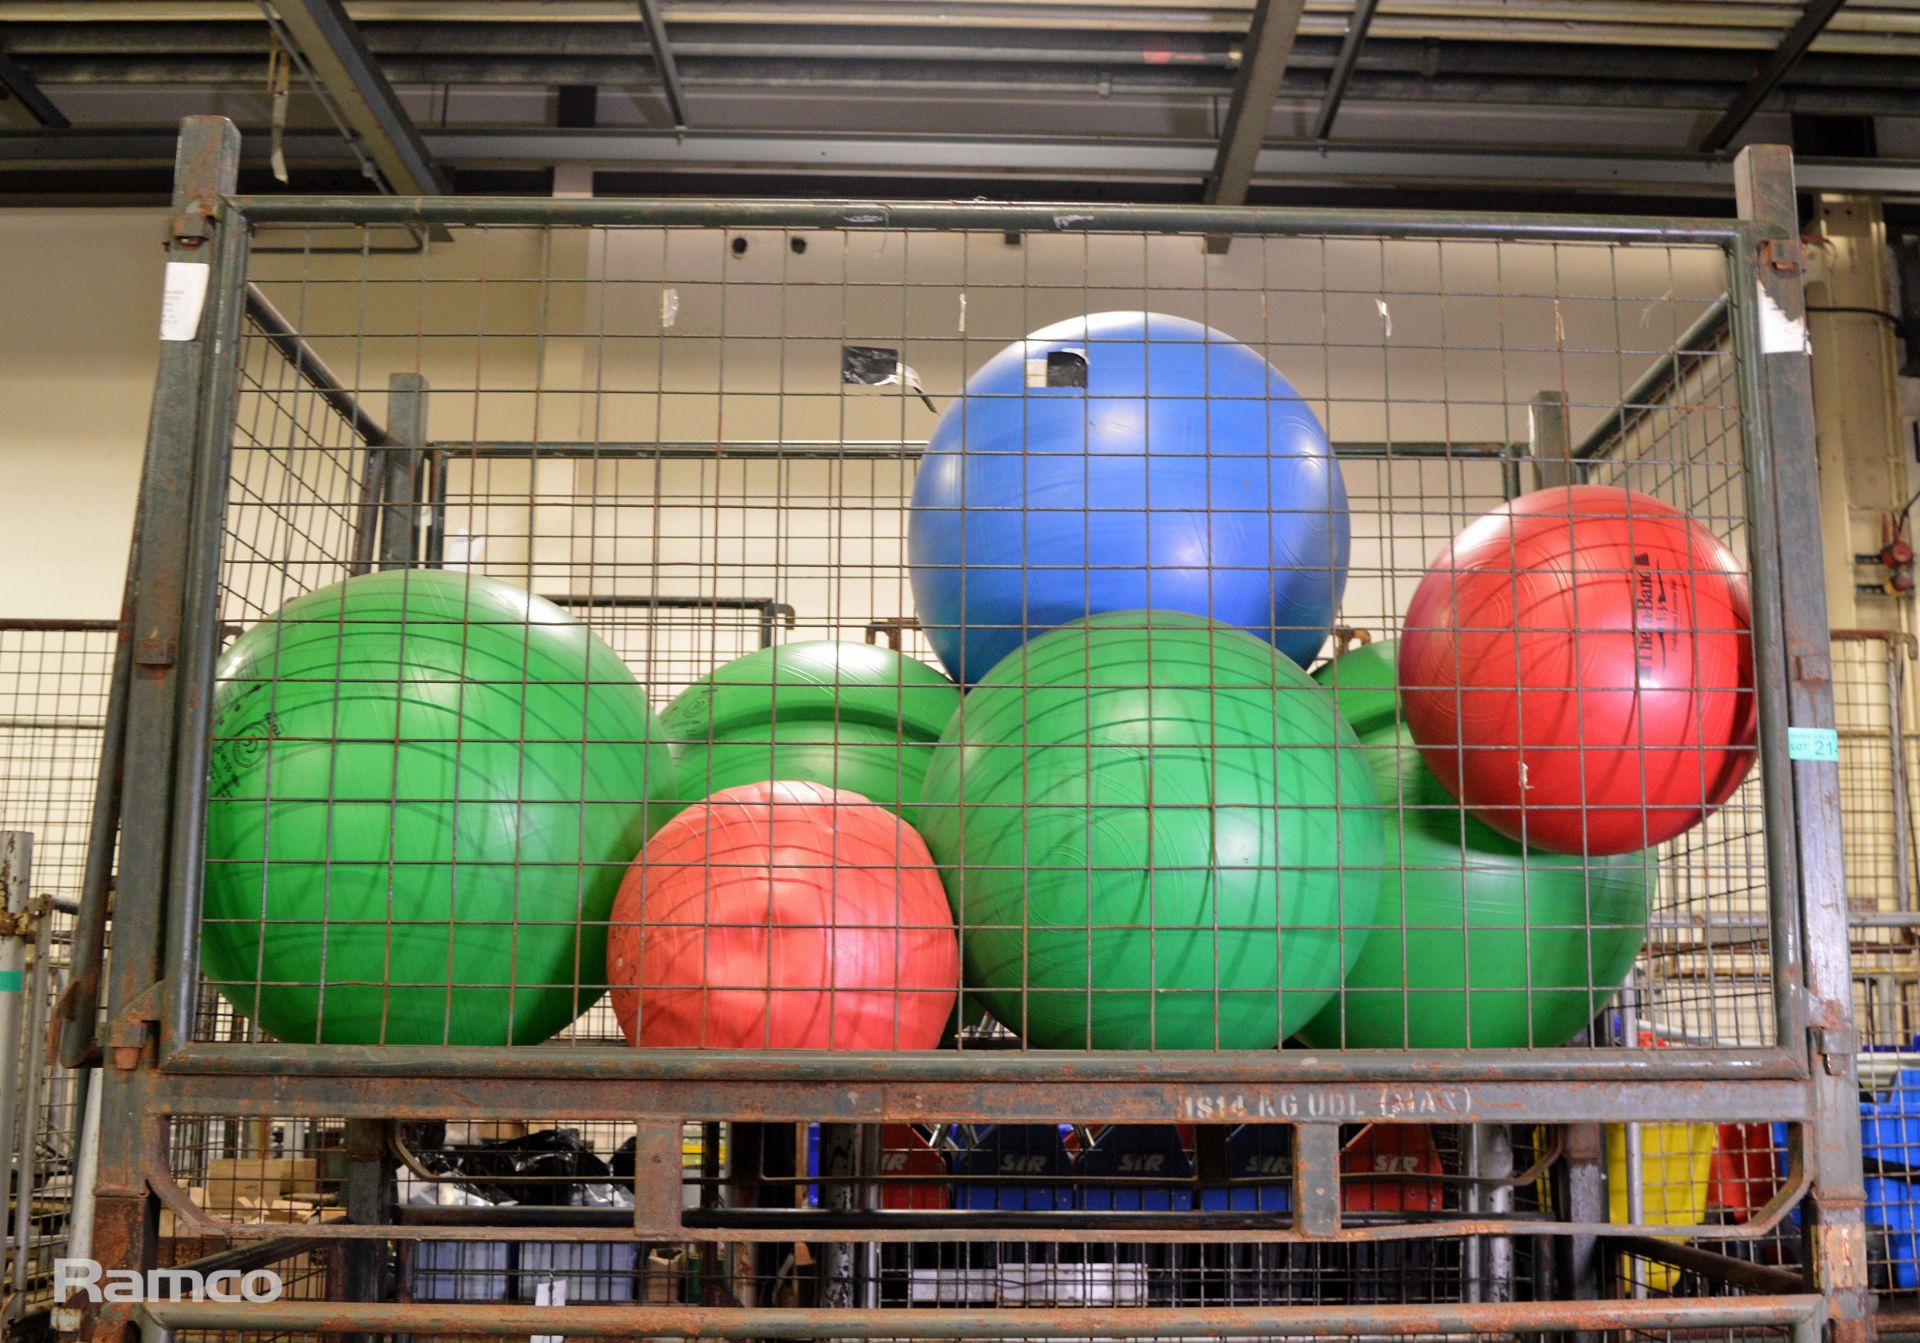 7x Thera-Brand ABS Professional exercise balls - 5x max diameter 65mm, 2x max diameter 55mm - STILLA